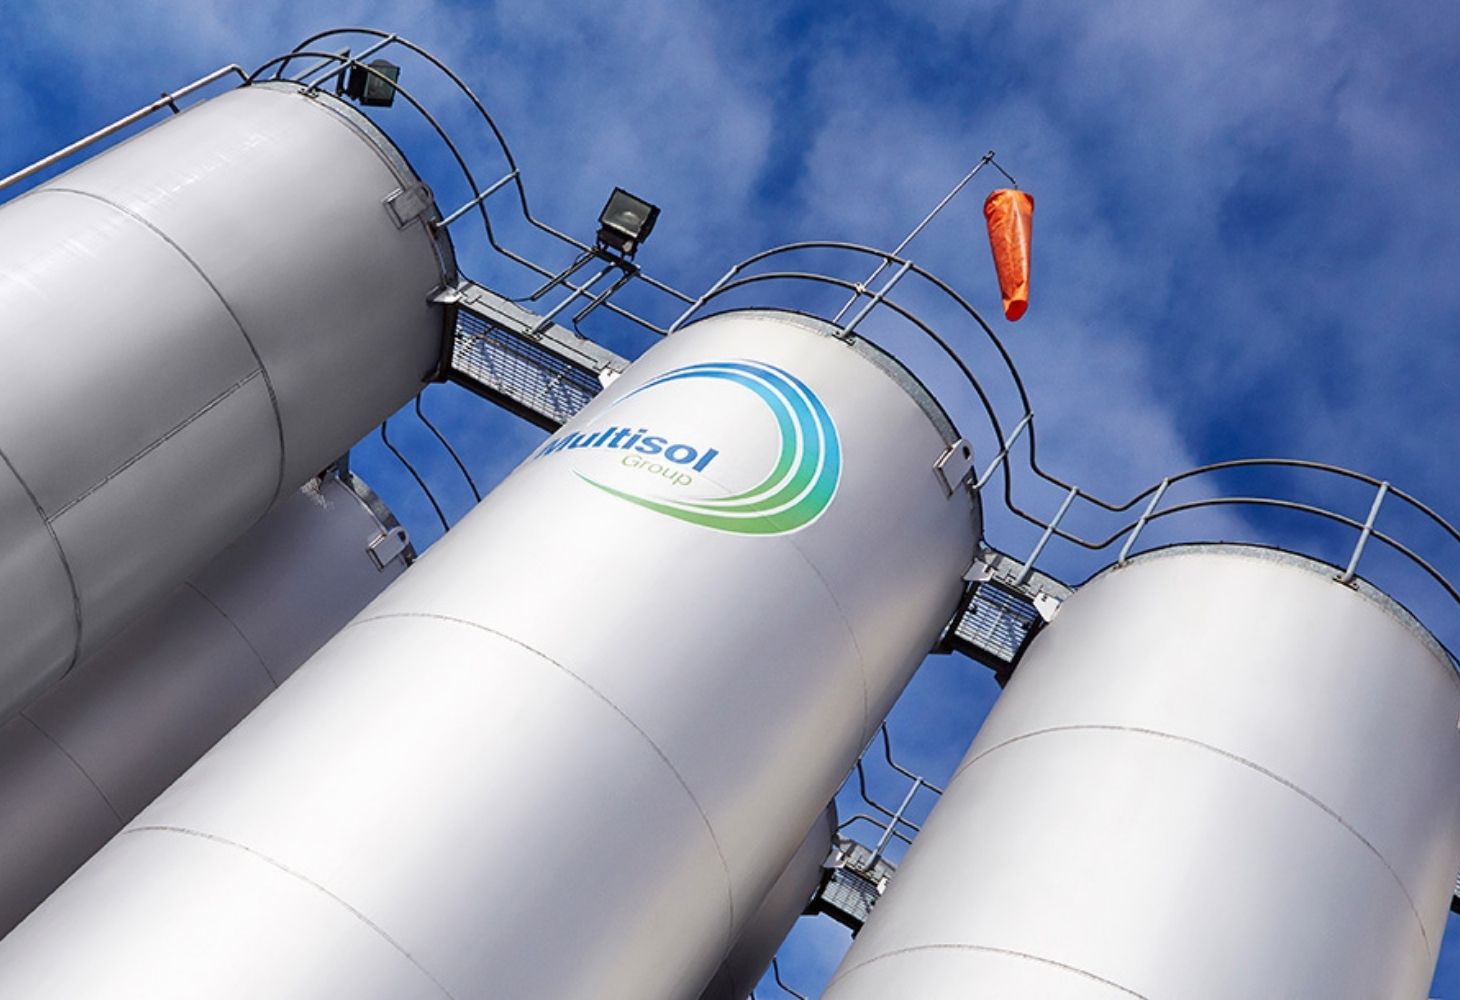 Multisol to distribute Novvi's renewable base oils in Europe - F&L Asia